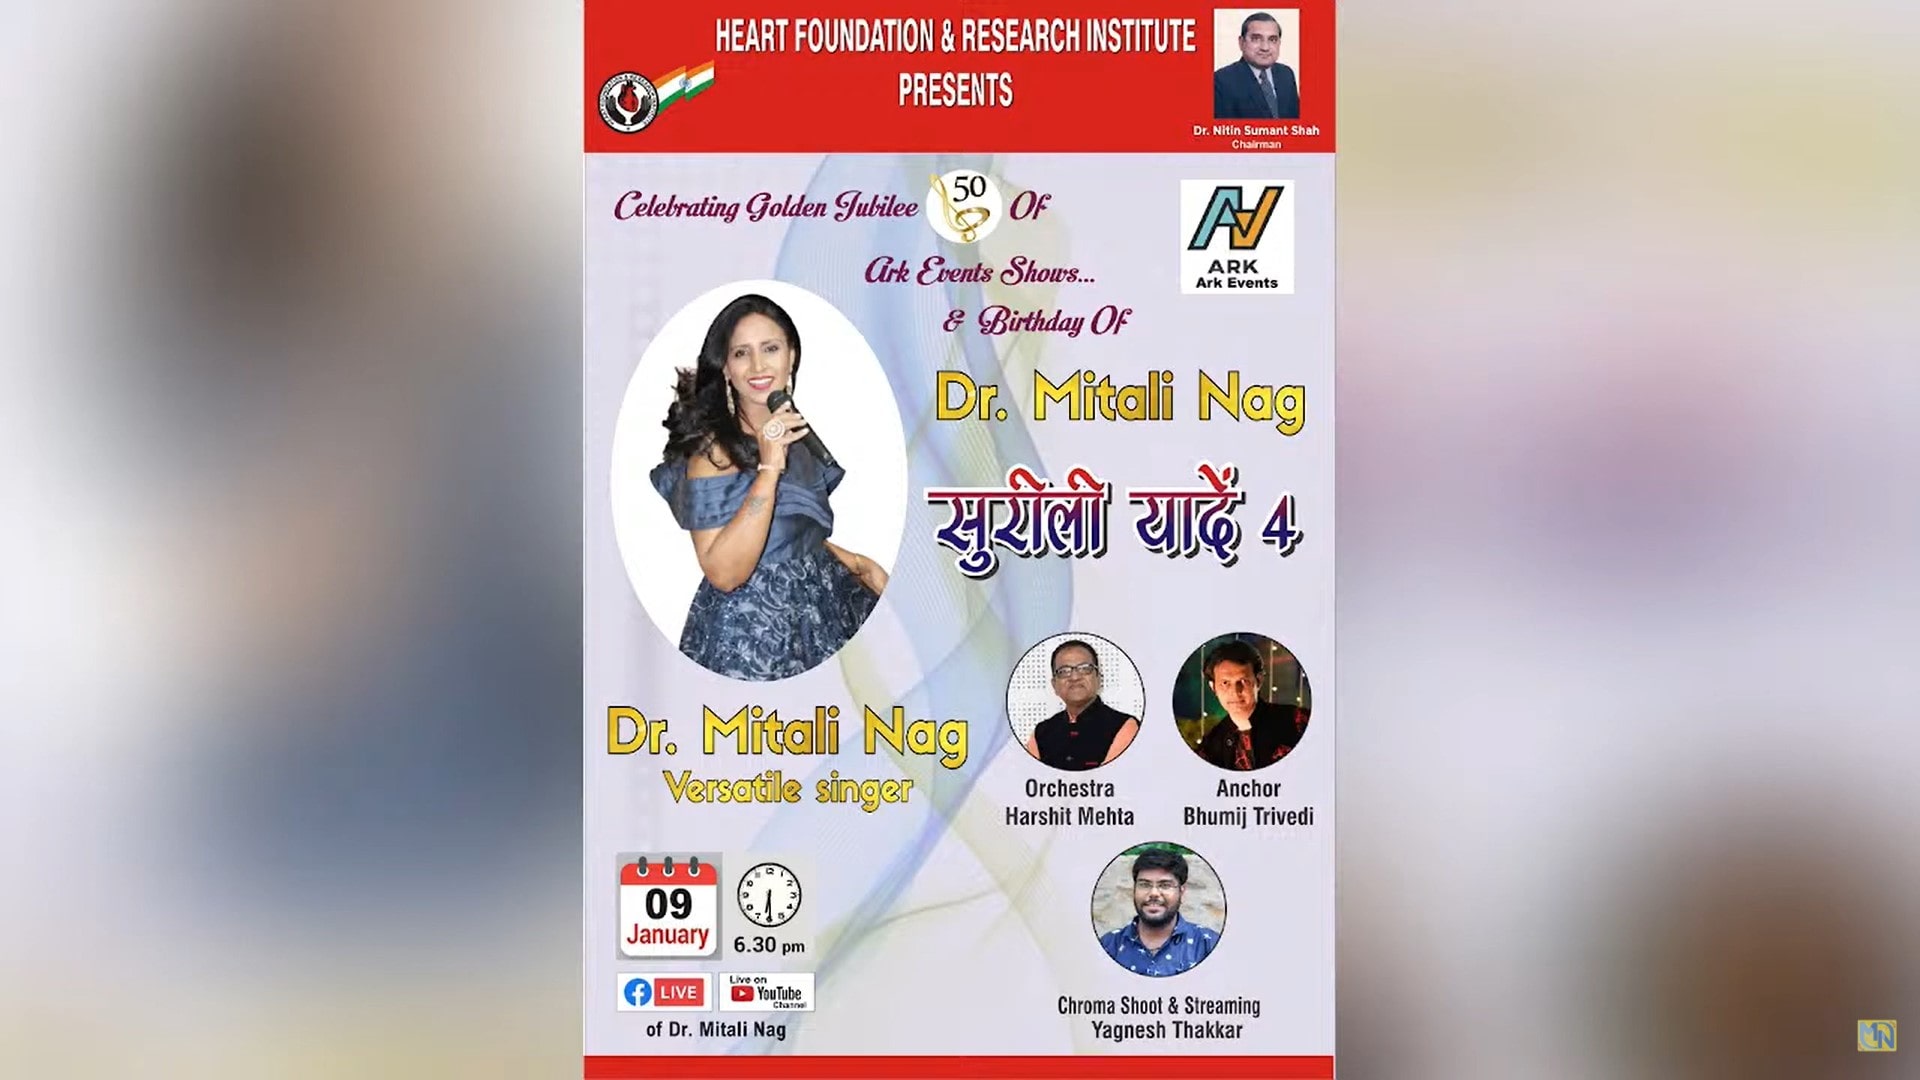 Sureeli Yaaden 4.0” Sponsorship for Cultural Education – Dr. Mitali Nag